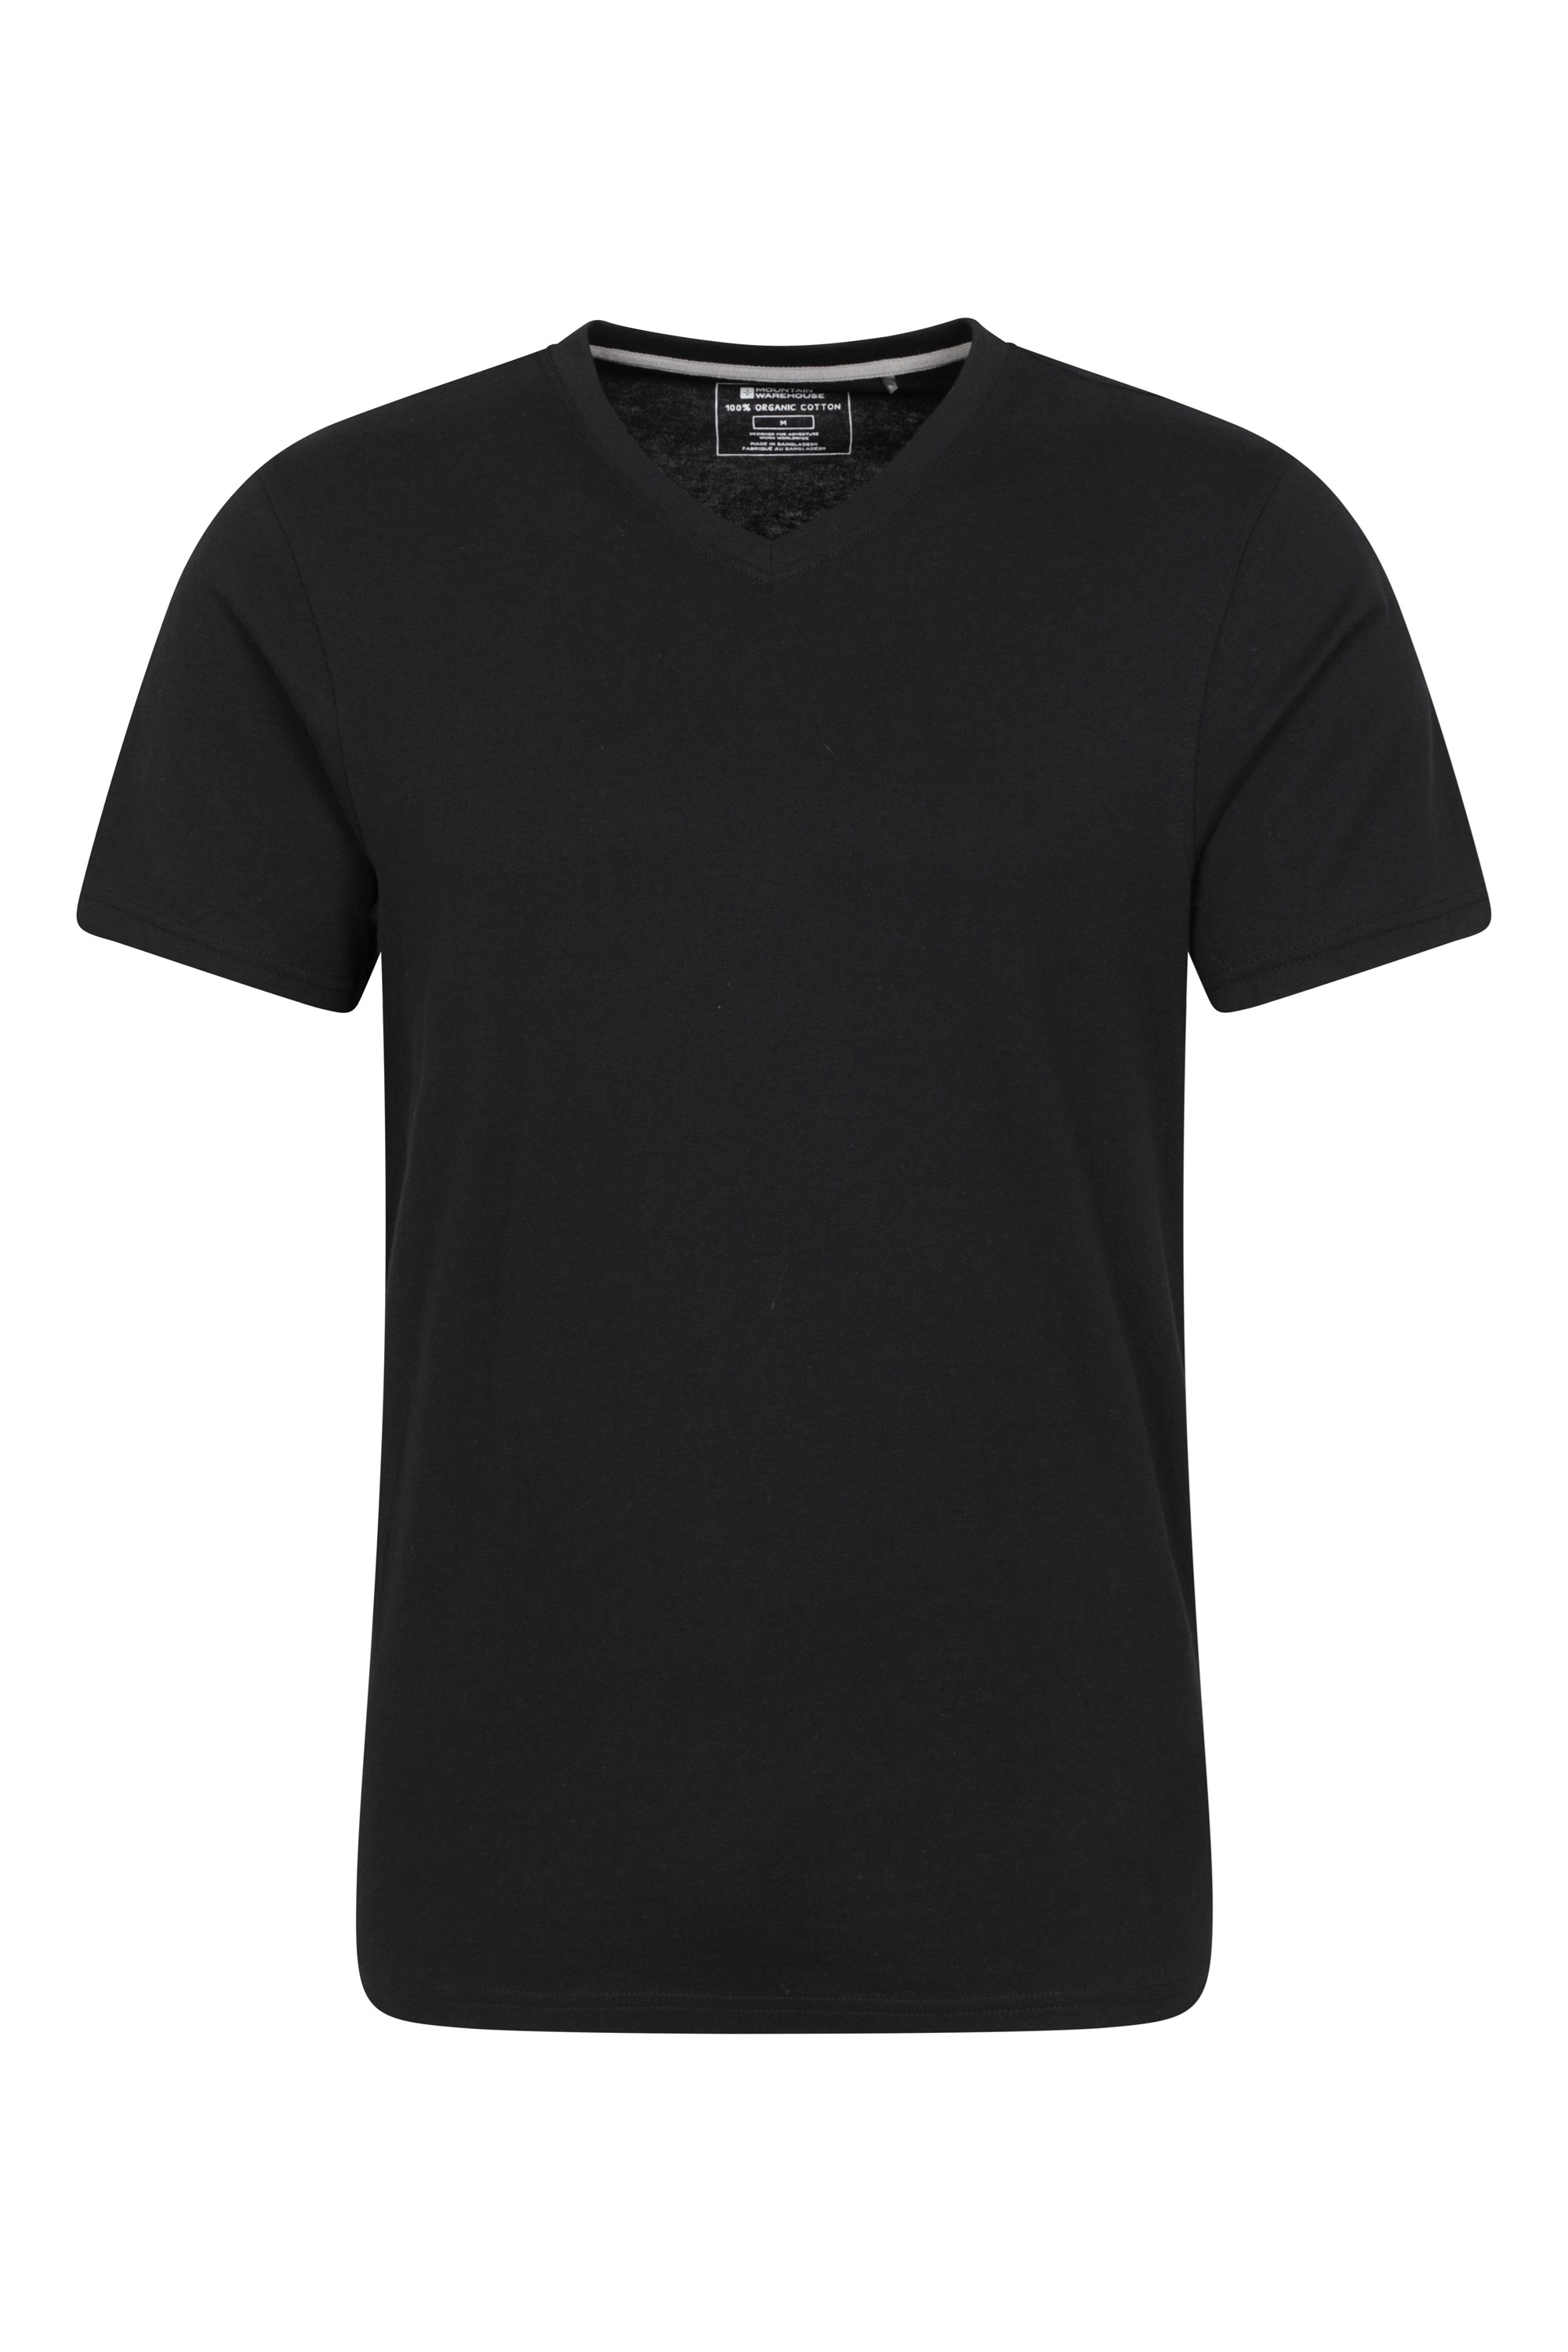 Eden Ii Mens Organic V-Neck T-Shirt - Black